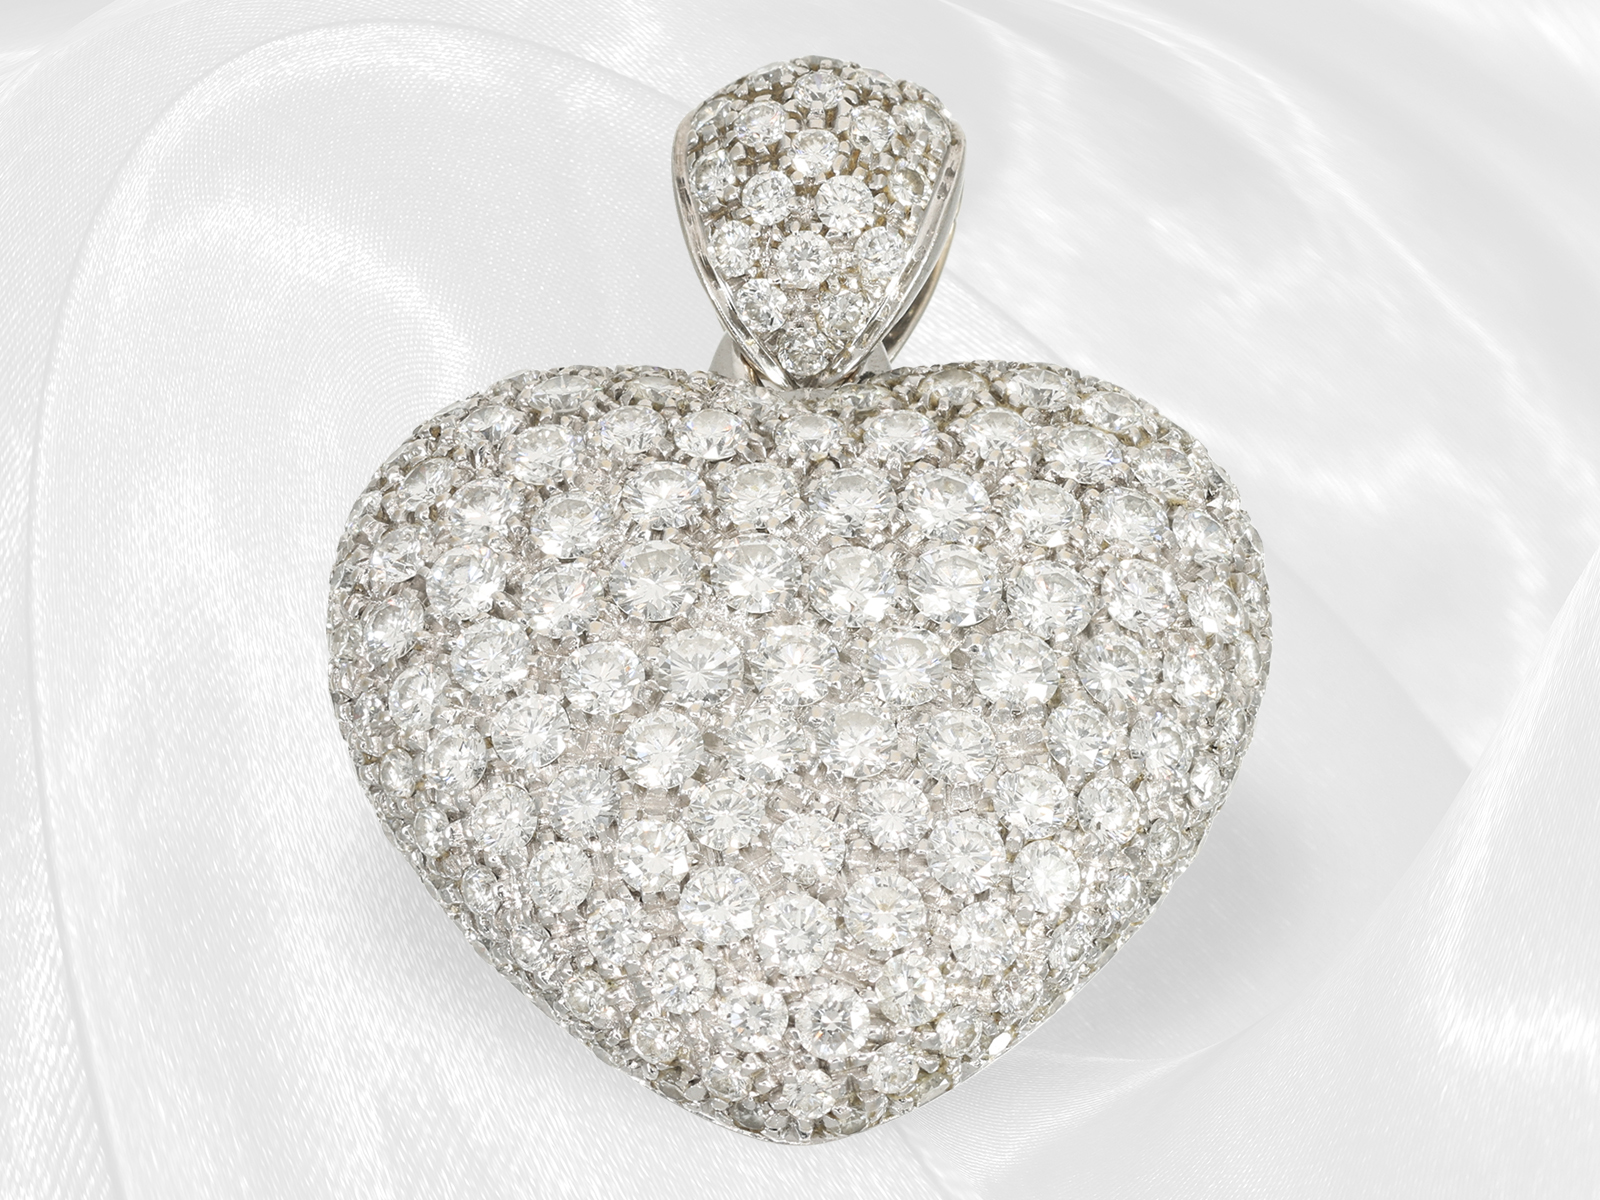 Italian richly set brilliant-cut diamond heart pendant, approx. 4ct brilliant-cut diamonds - Image 4 of 8